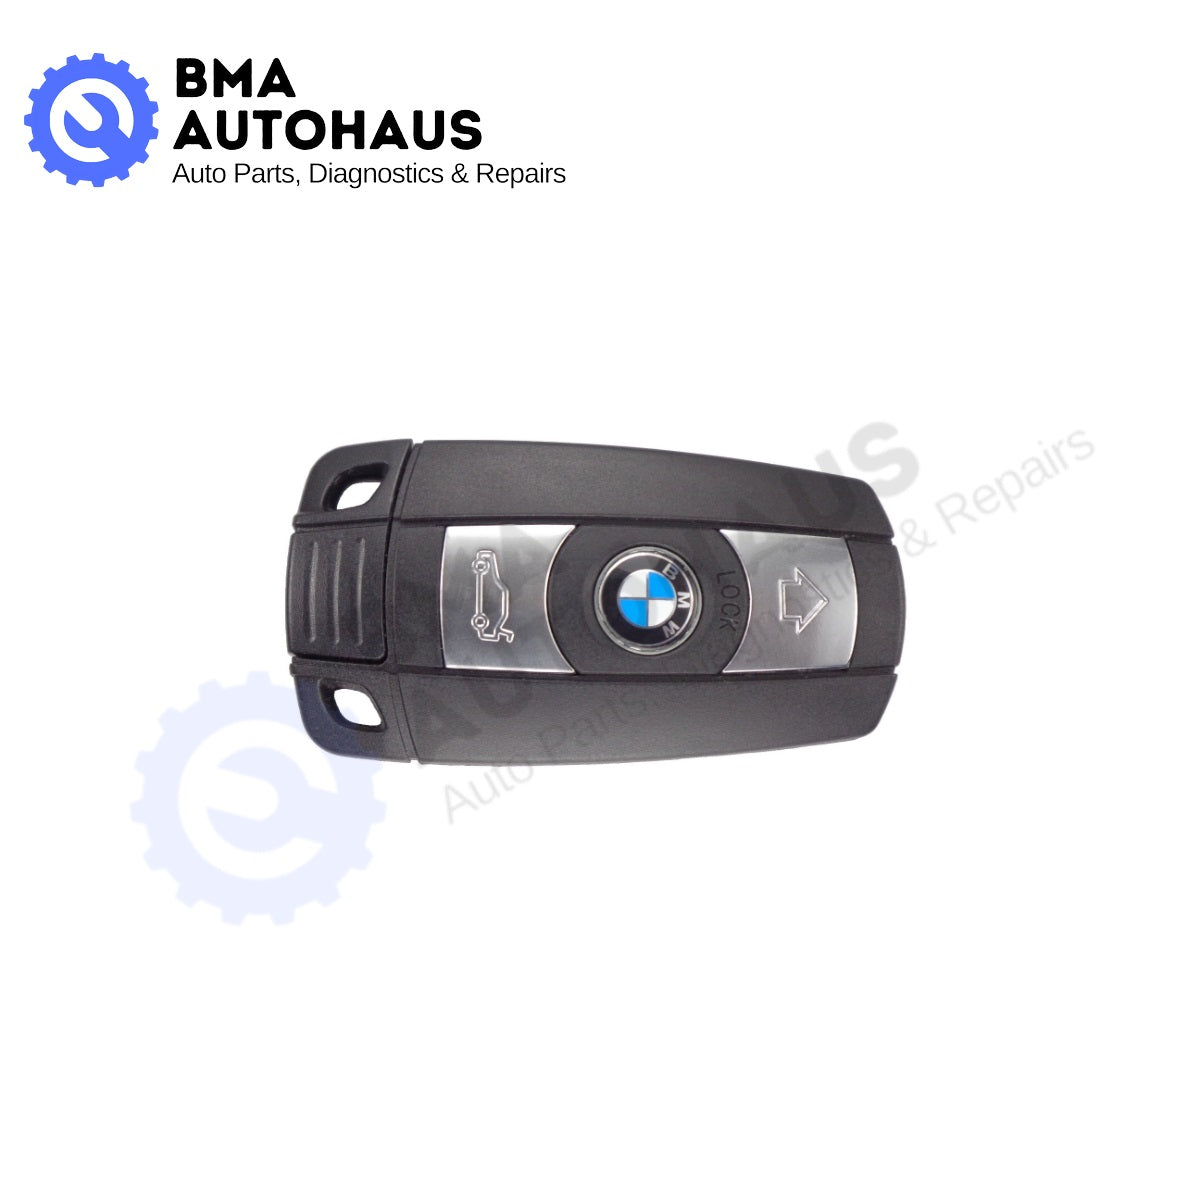 BMW Schlüssel Serie 3 - 5, CAS3/CAS3+, Schlüssel